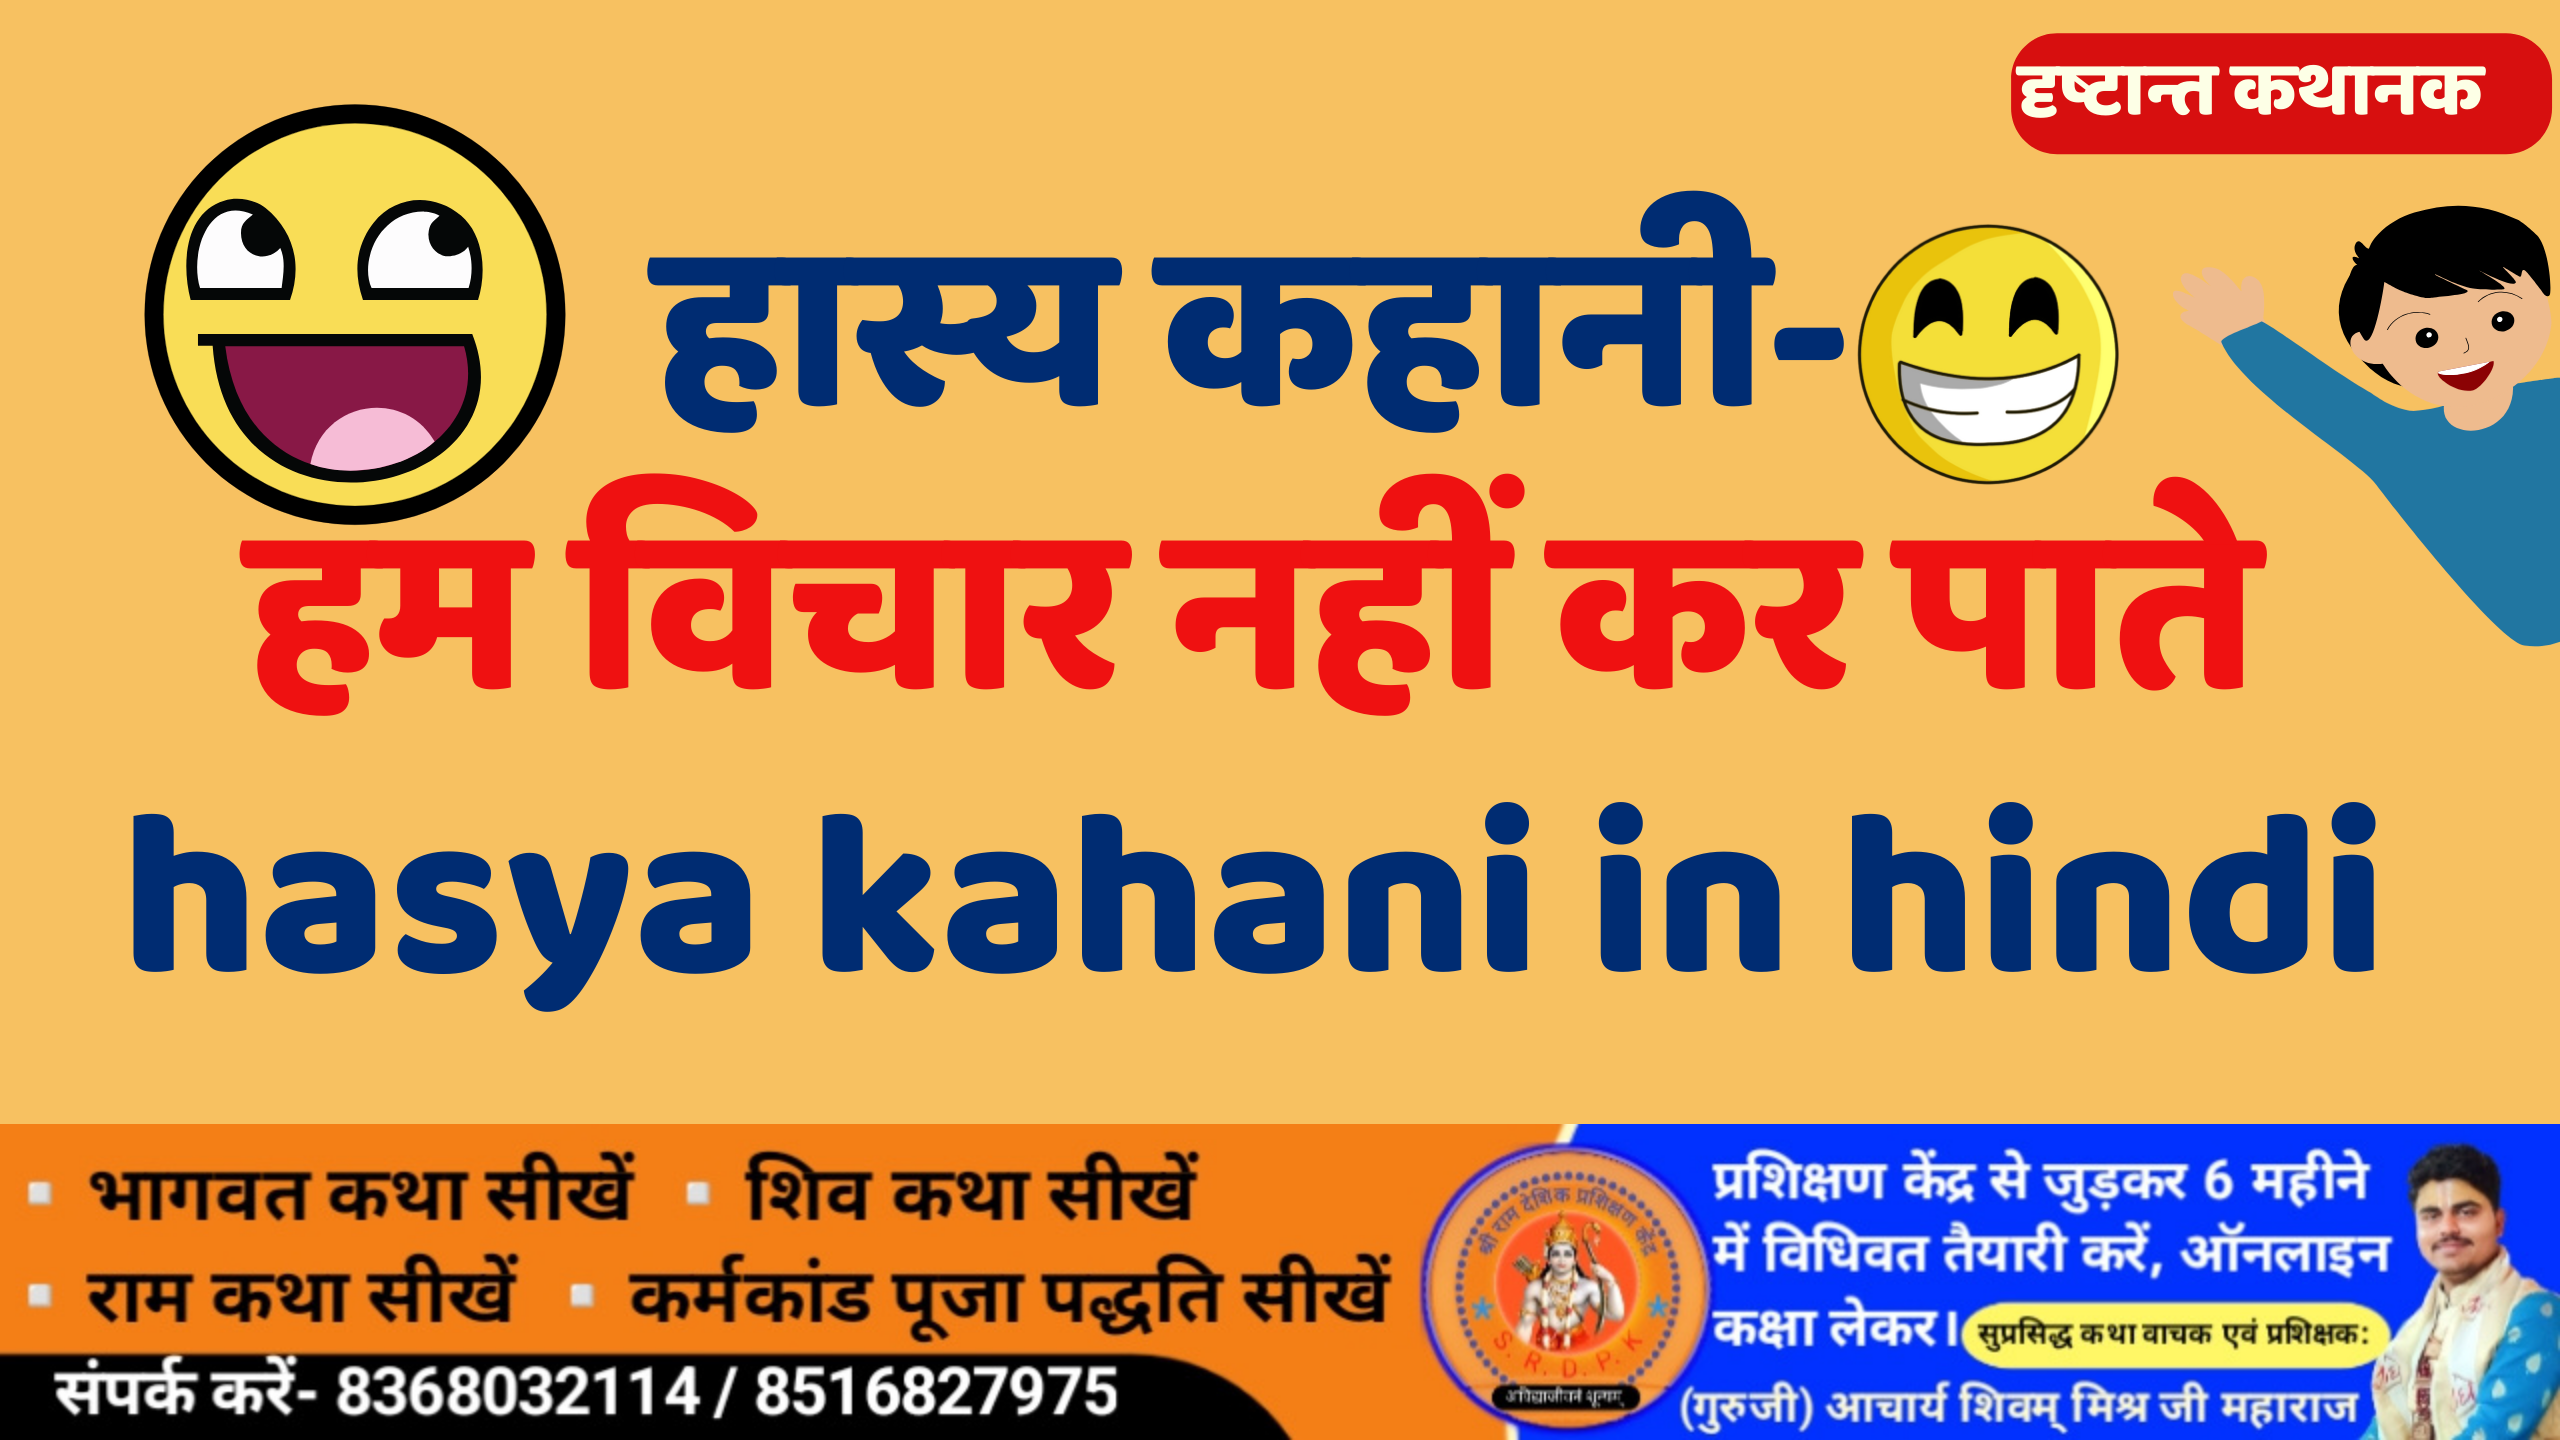 हास्य कहानी- hasya kahani in hindi